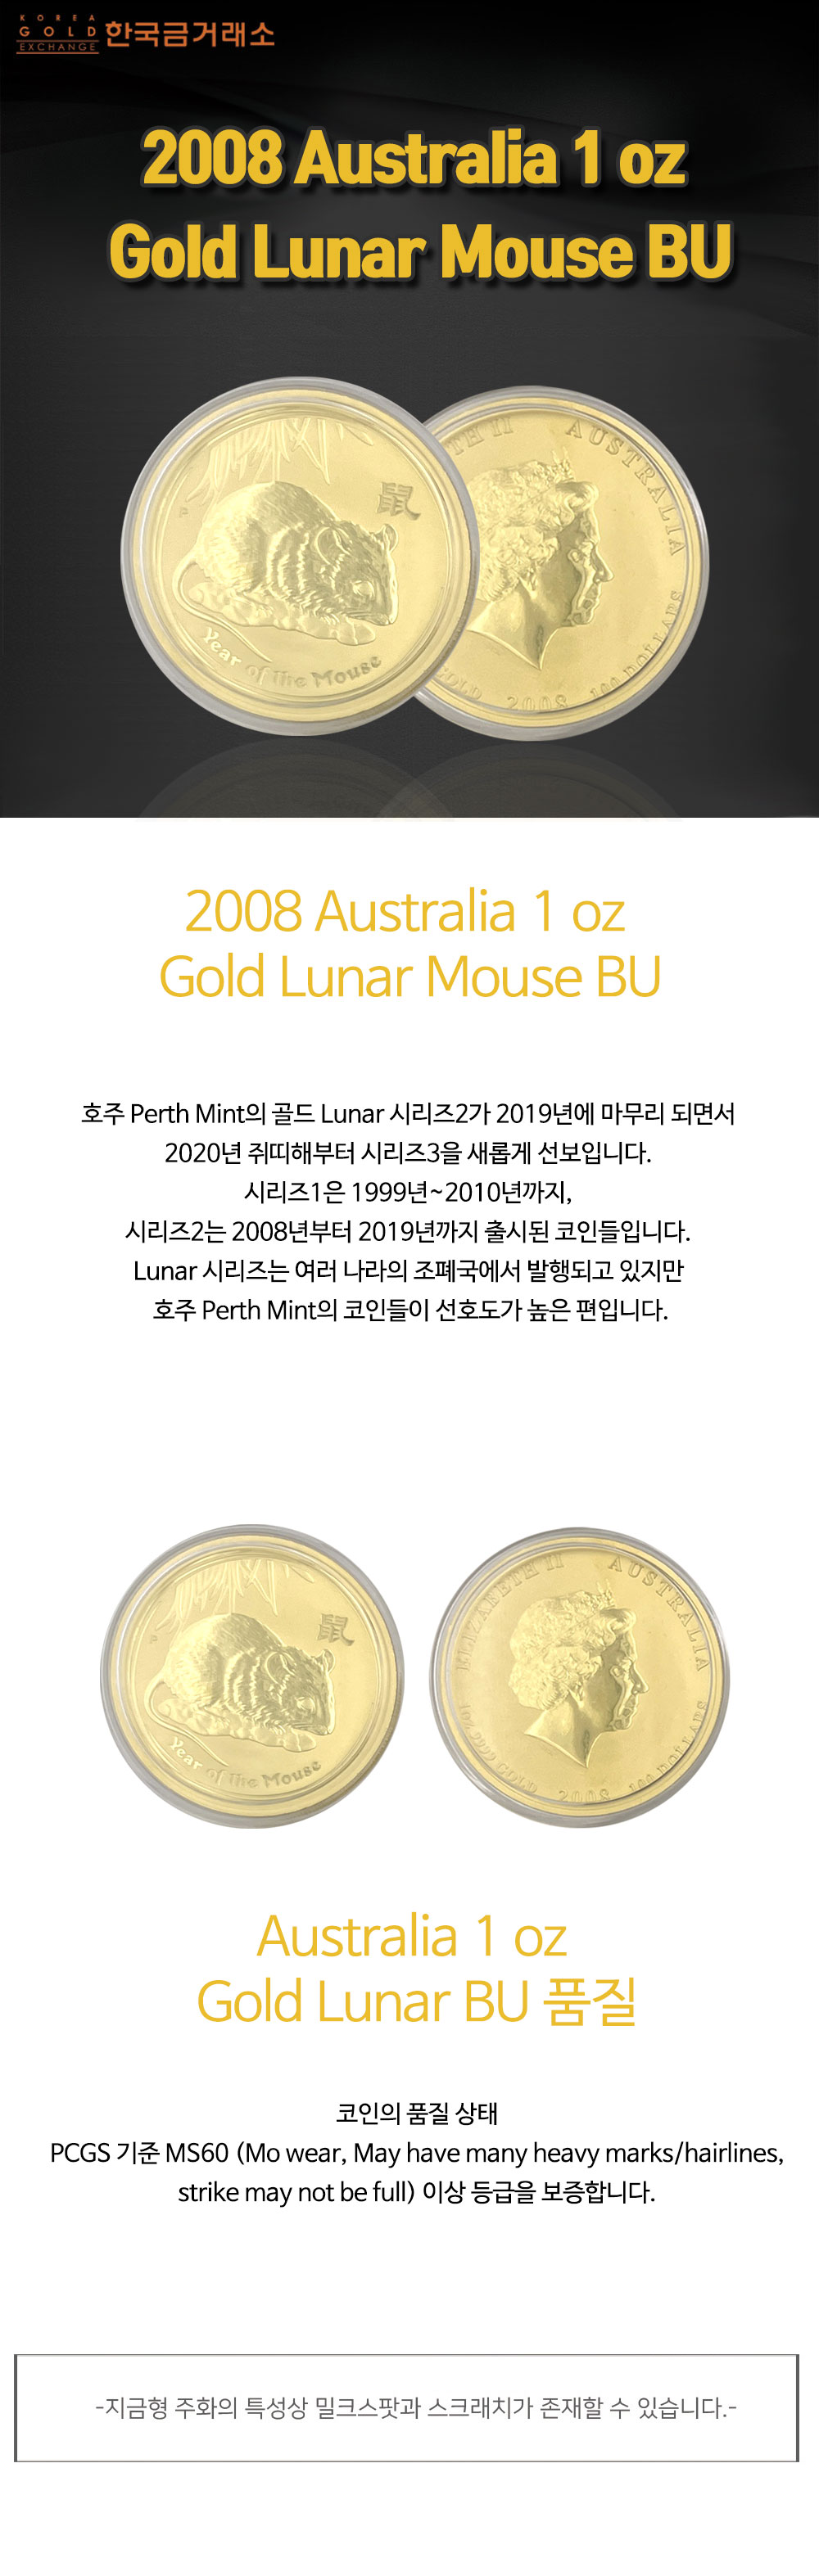 2008 Australia 1 Oz Gold Lunar Mouse Bu : 좋은 금, 은 싸게 사고 비싸게 팔기 (위탁매매)